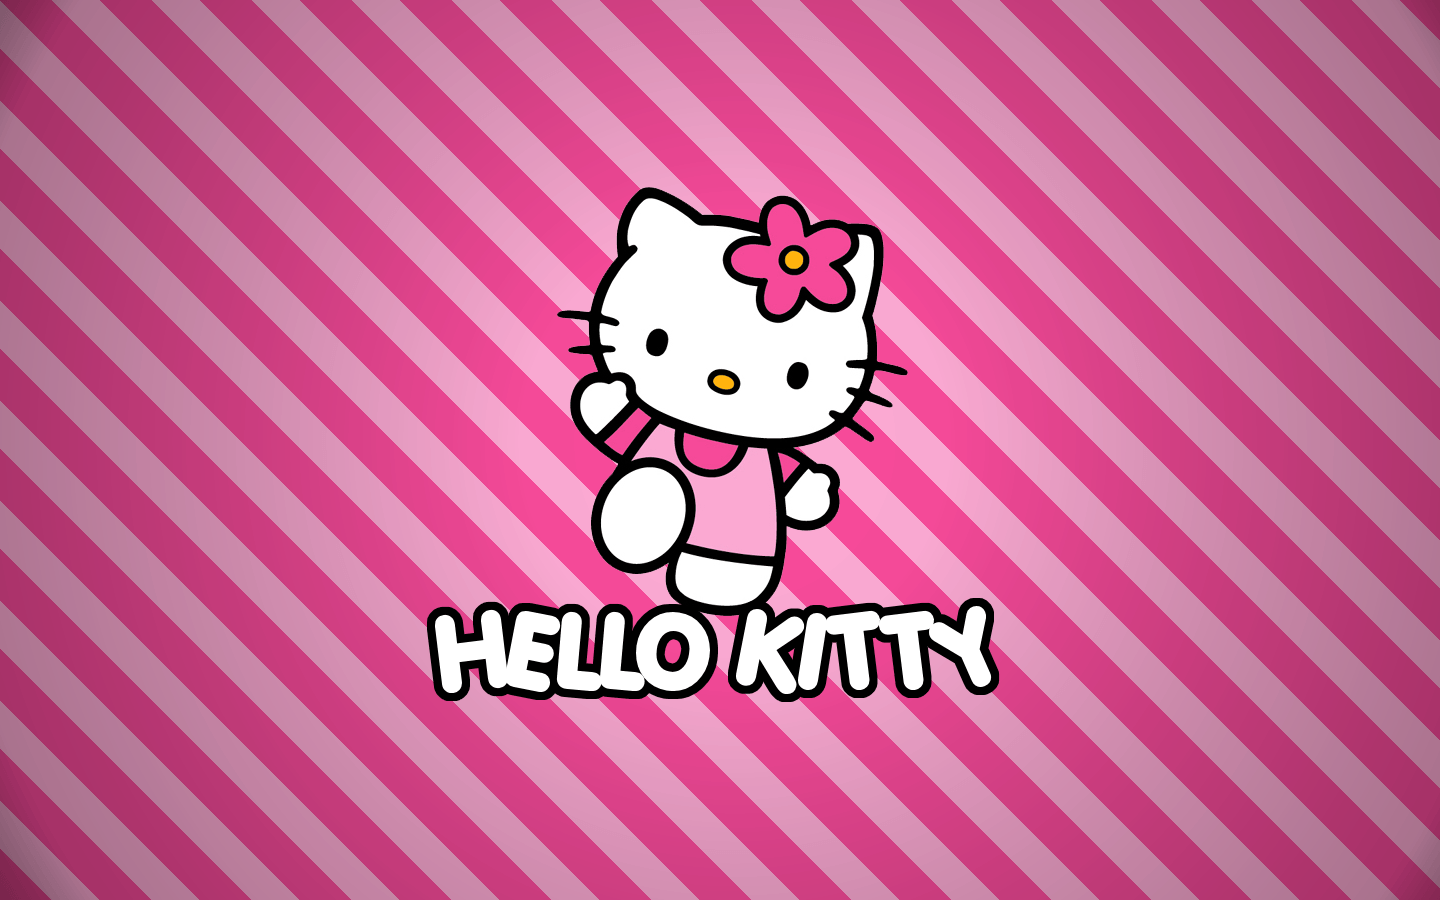 Hello Kitty Desktop Background. Kitty Christmas Wallpaper, Hello Kitty iPhone Wallpaper and Hello Kitty Wallpaper